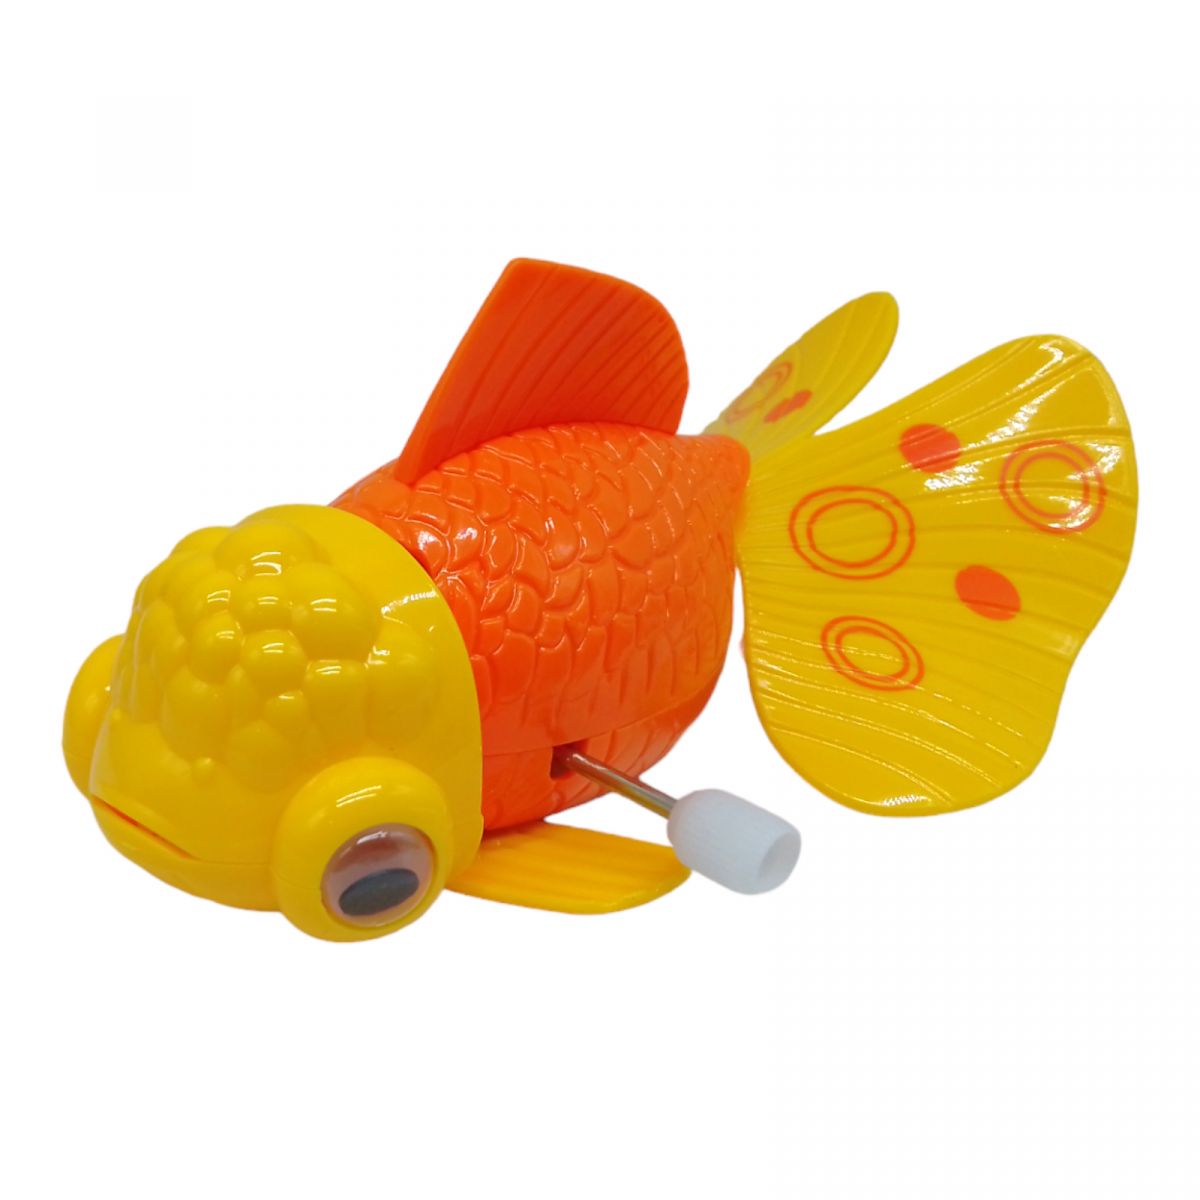 Заводна іграшка "Золота рибка" (помаранчева)